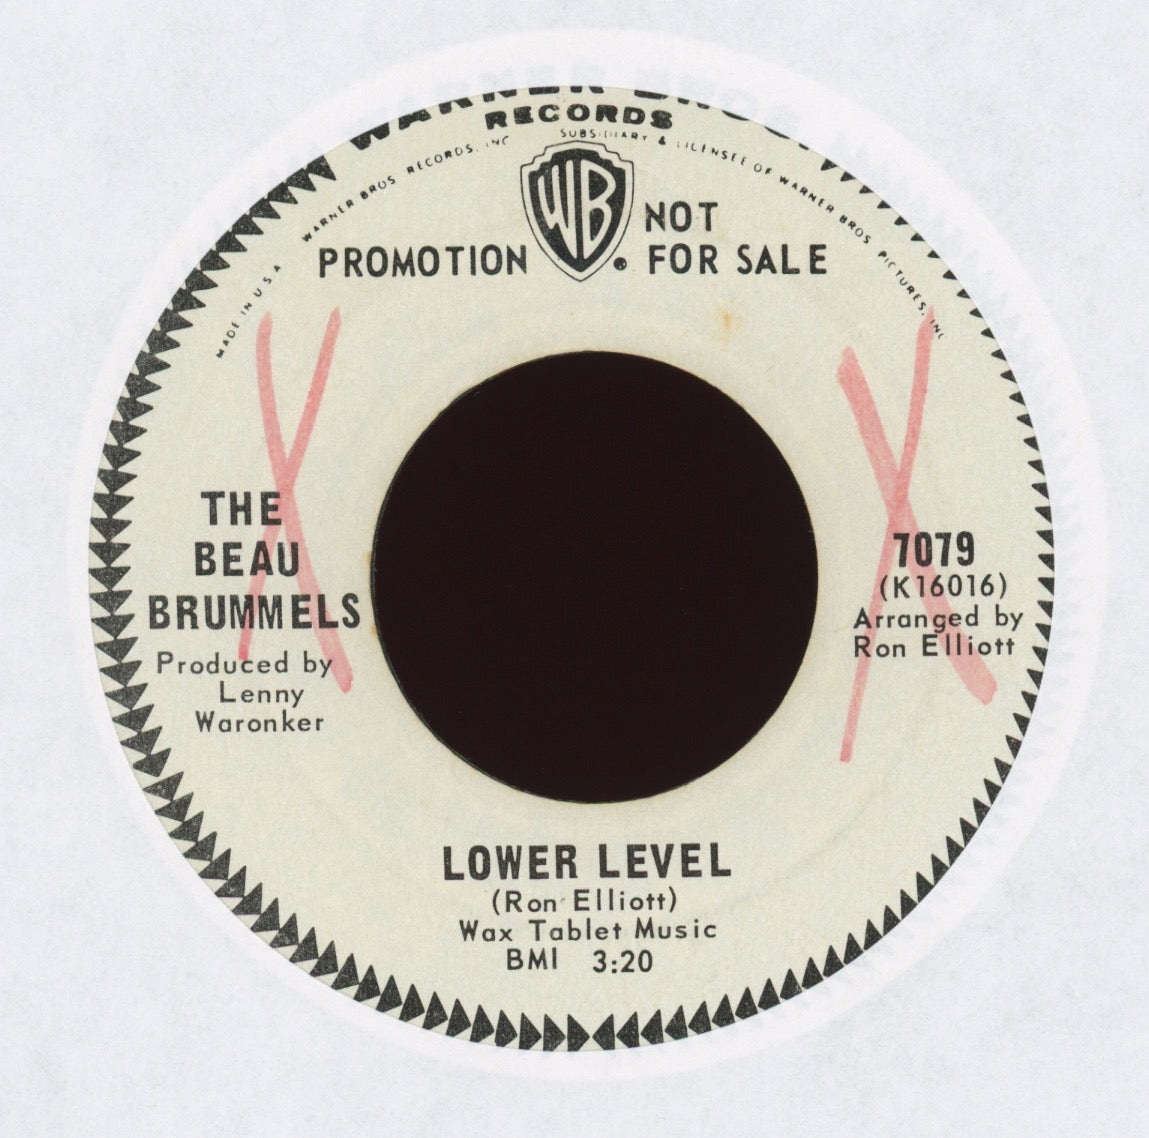 The Beau Brummels - Lower Level on WB Promo